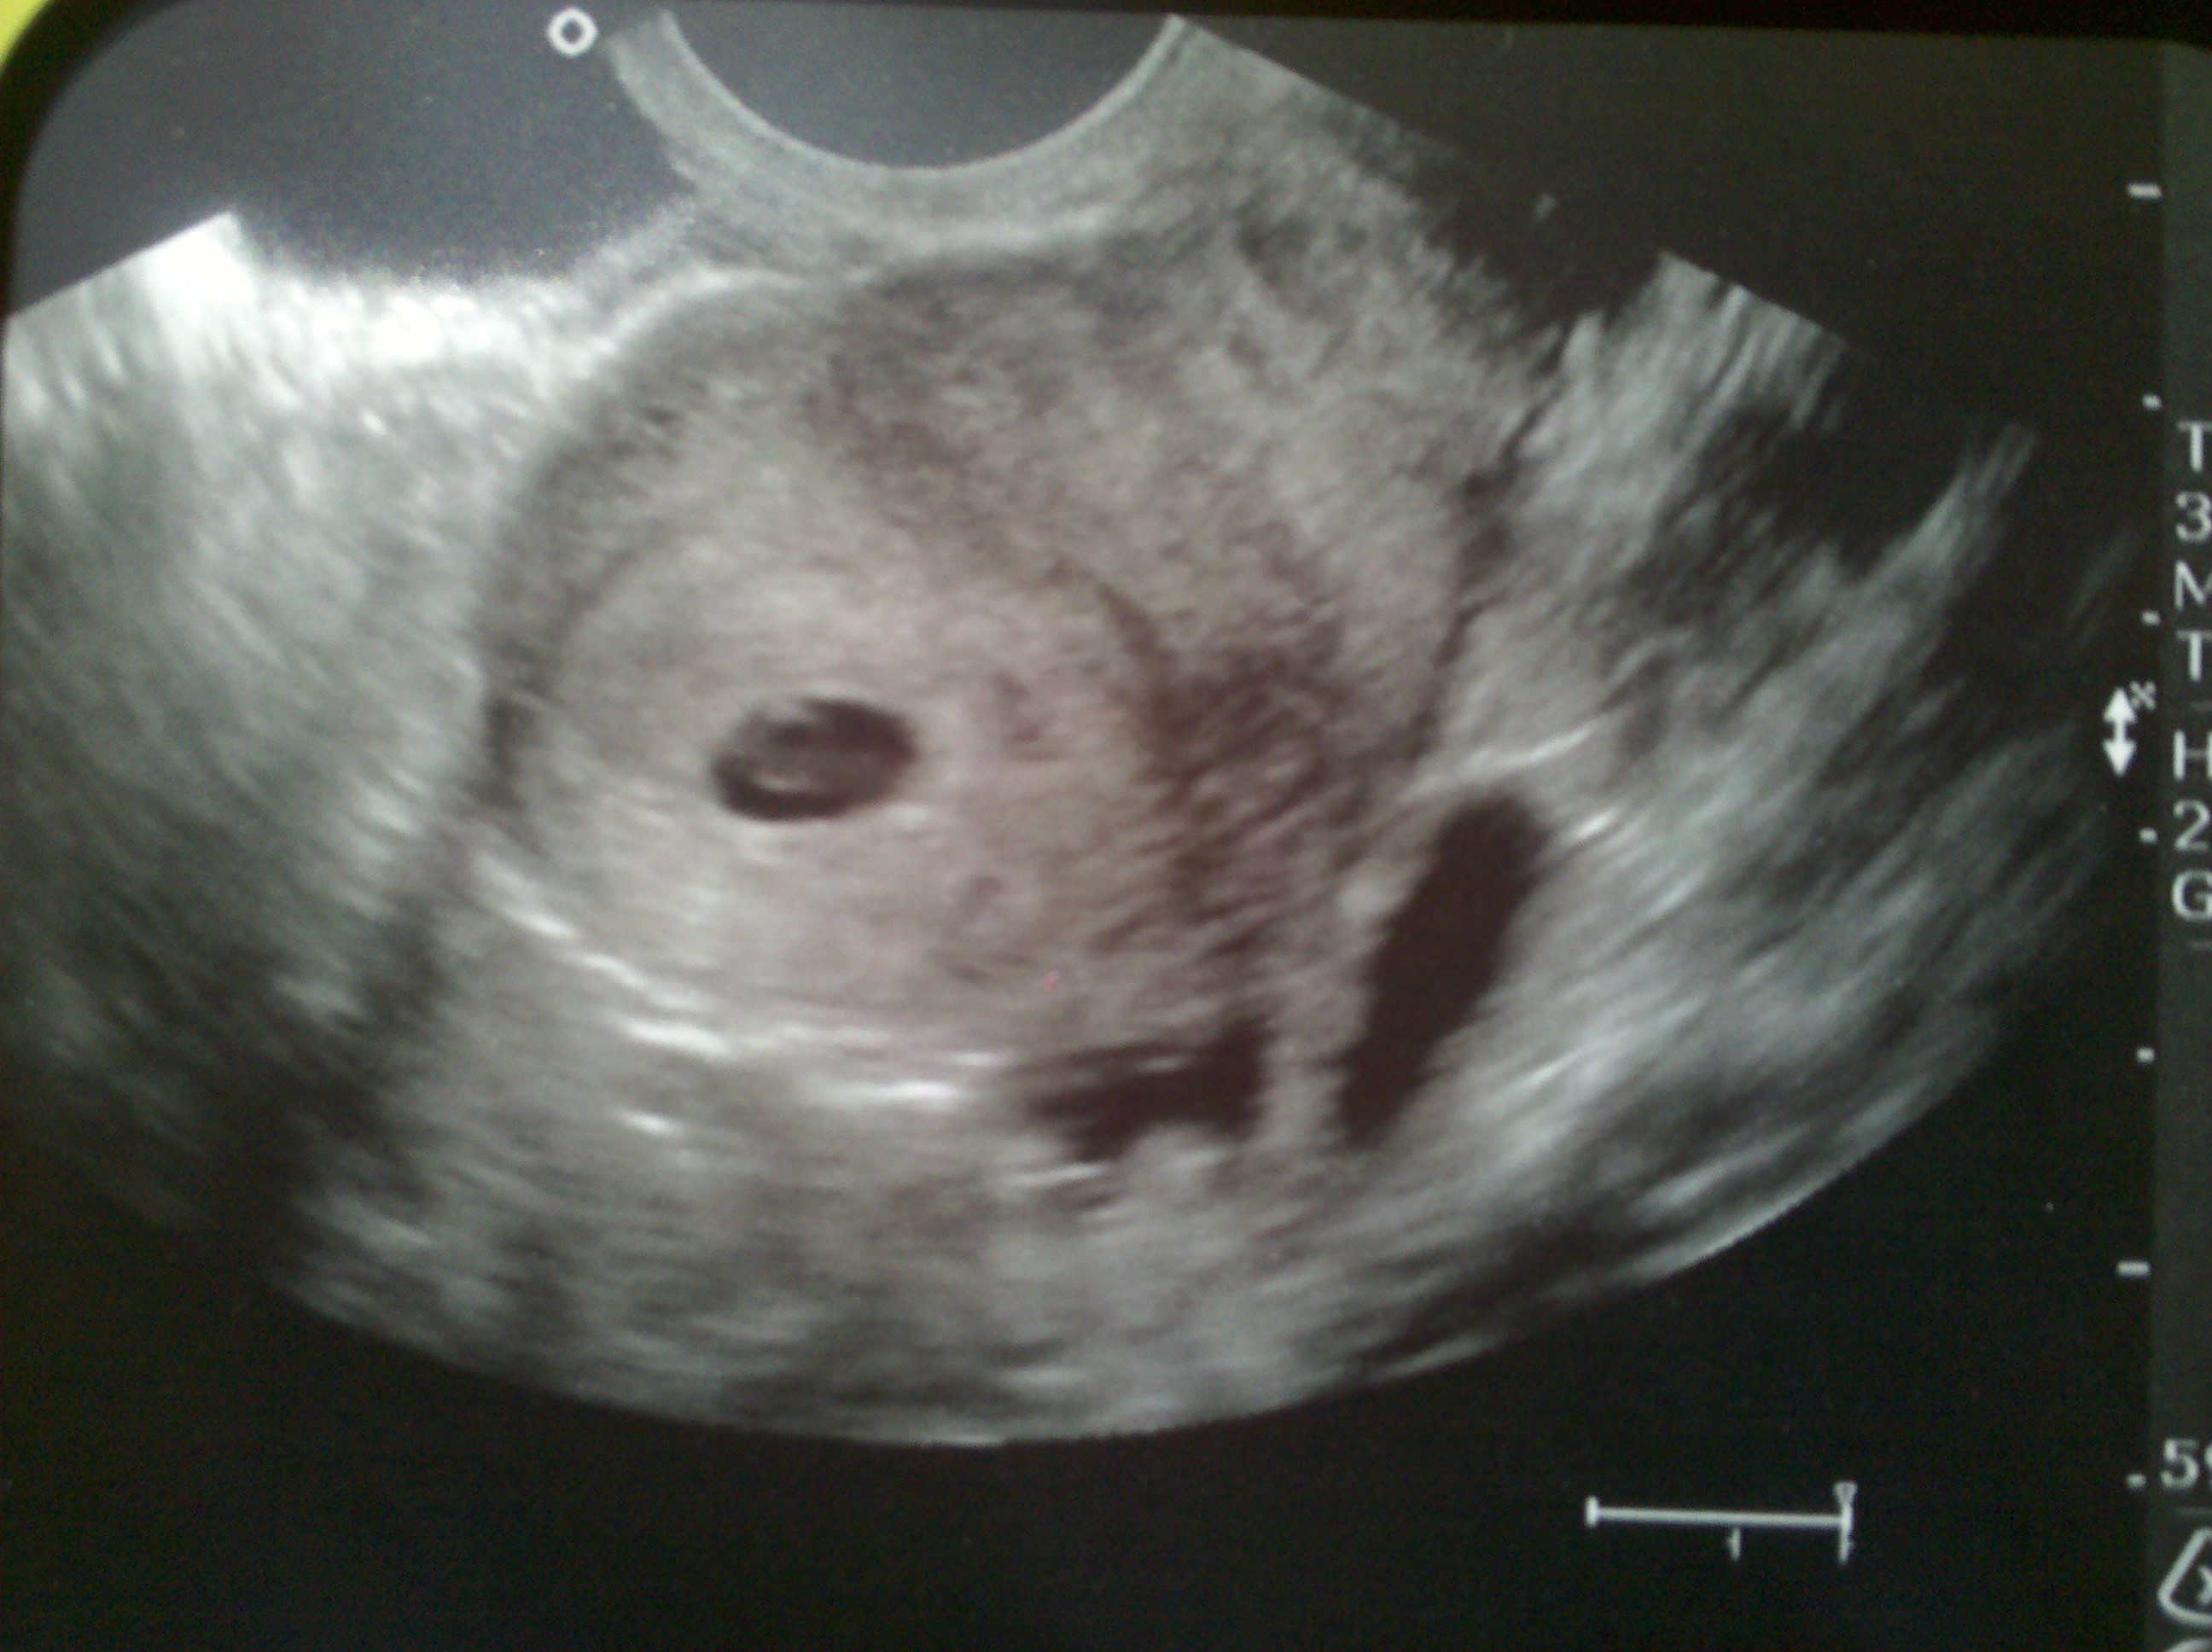 Плод 1 2 недели. 3 Недели беременности фото плода на УЗИ. УЗИ две недели беременности. УЗИ 7 недель беременности.